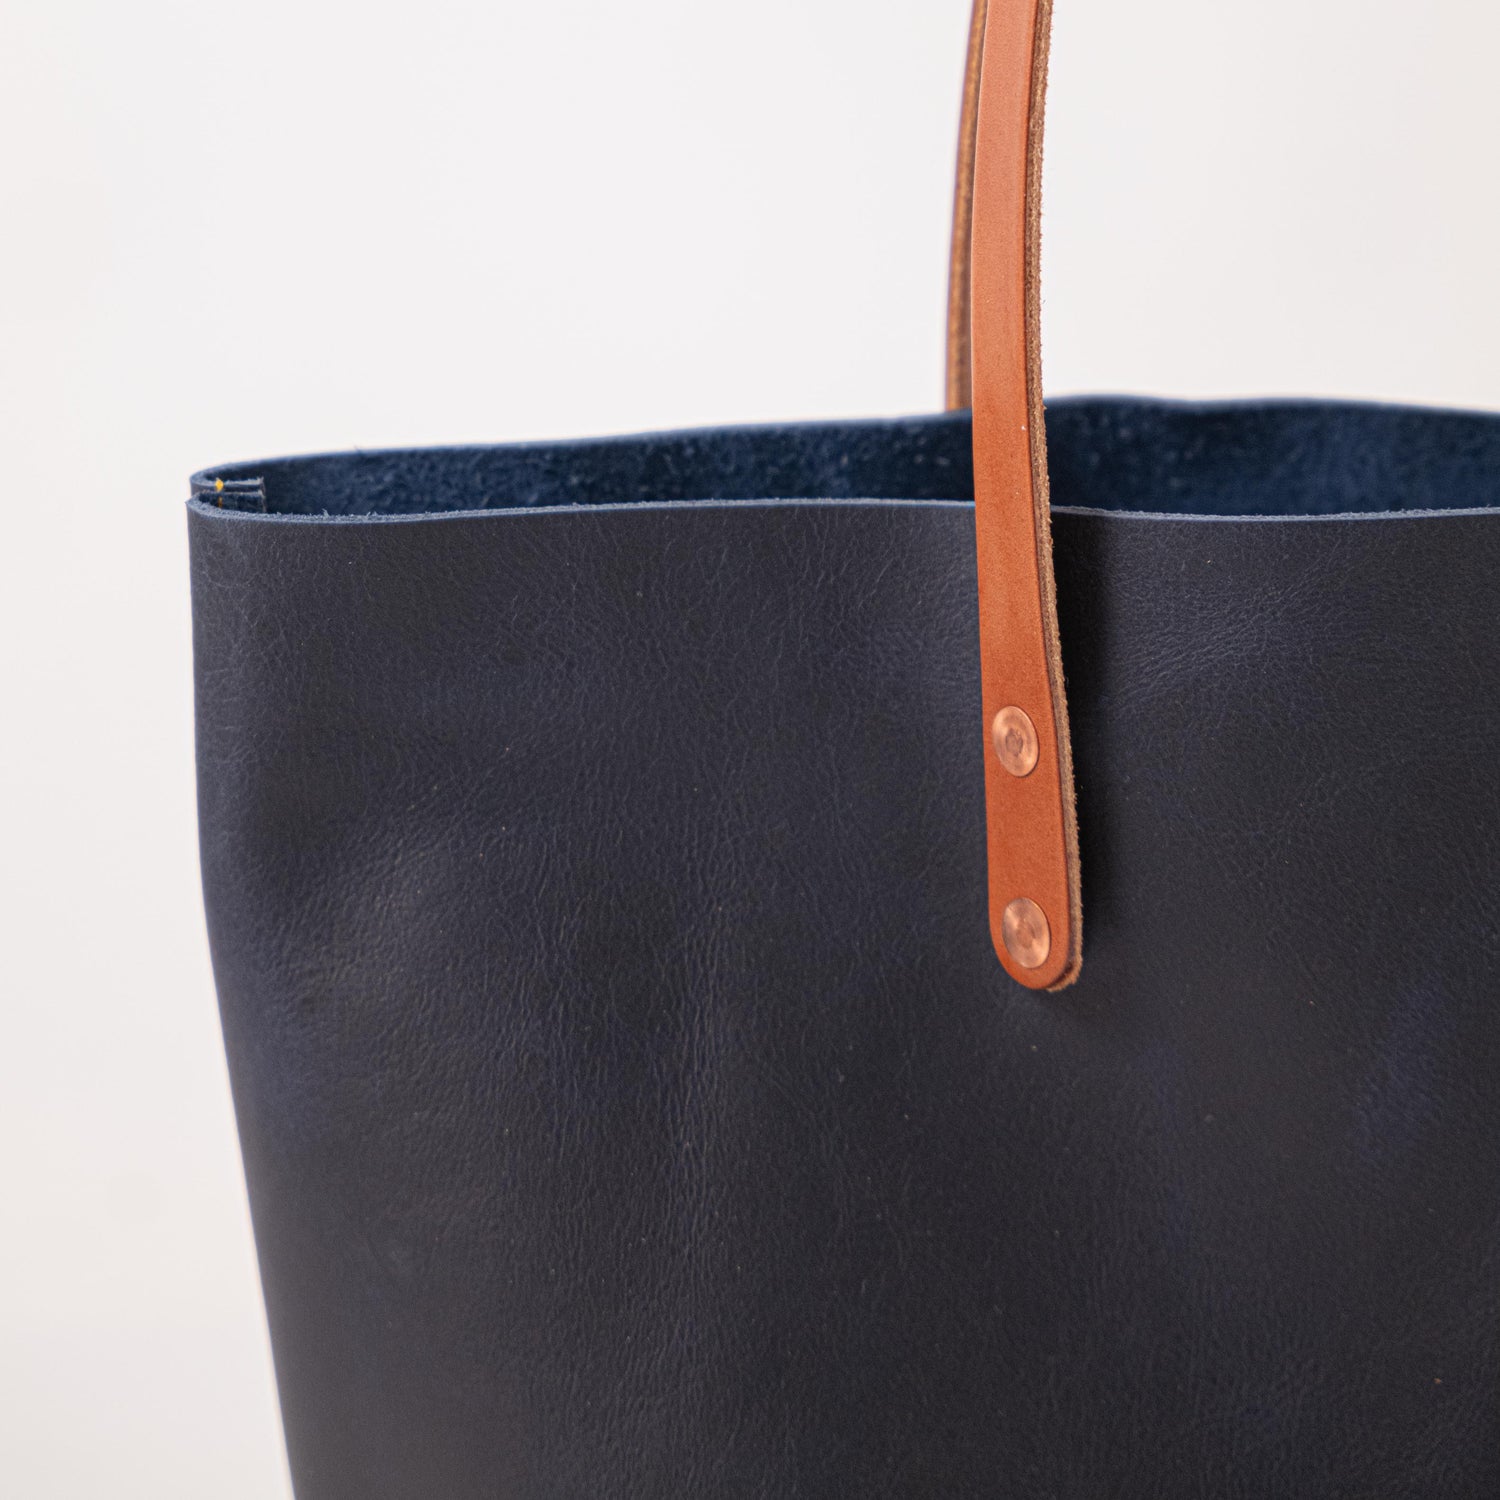 Navy Kodiak East West Tote- blue handbag handmade in America